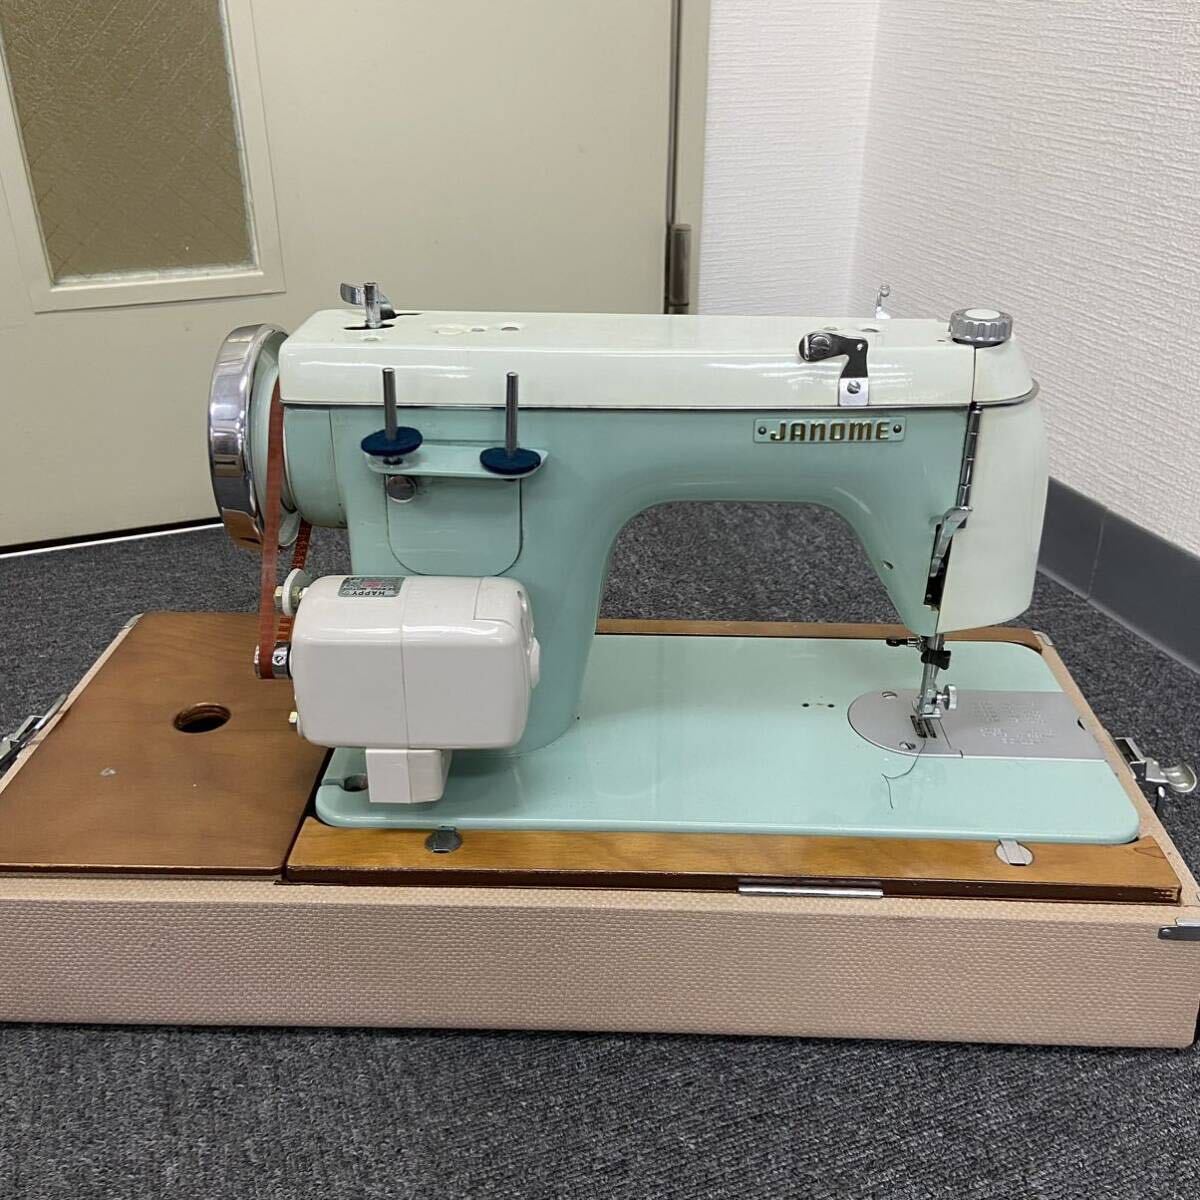 U4 JANOME ジャノメミシン MODEL-365 Sewing Machine 昭和レトロ アンティーク 手工芸 備品 フットコントローラー付 手芸 裁縫 _画像5